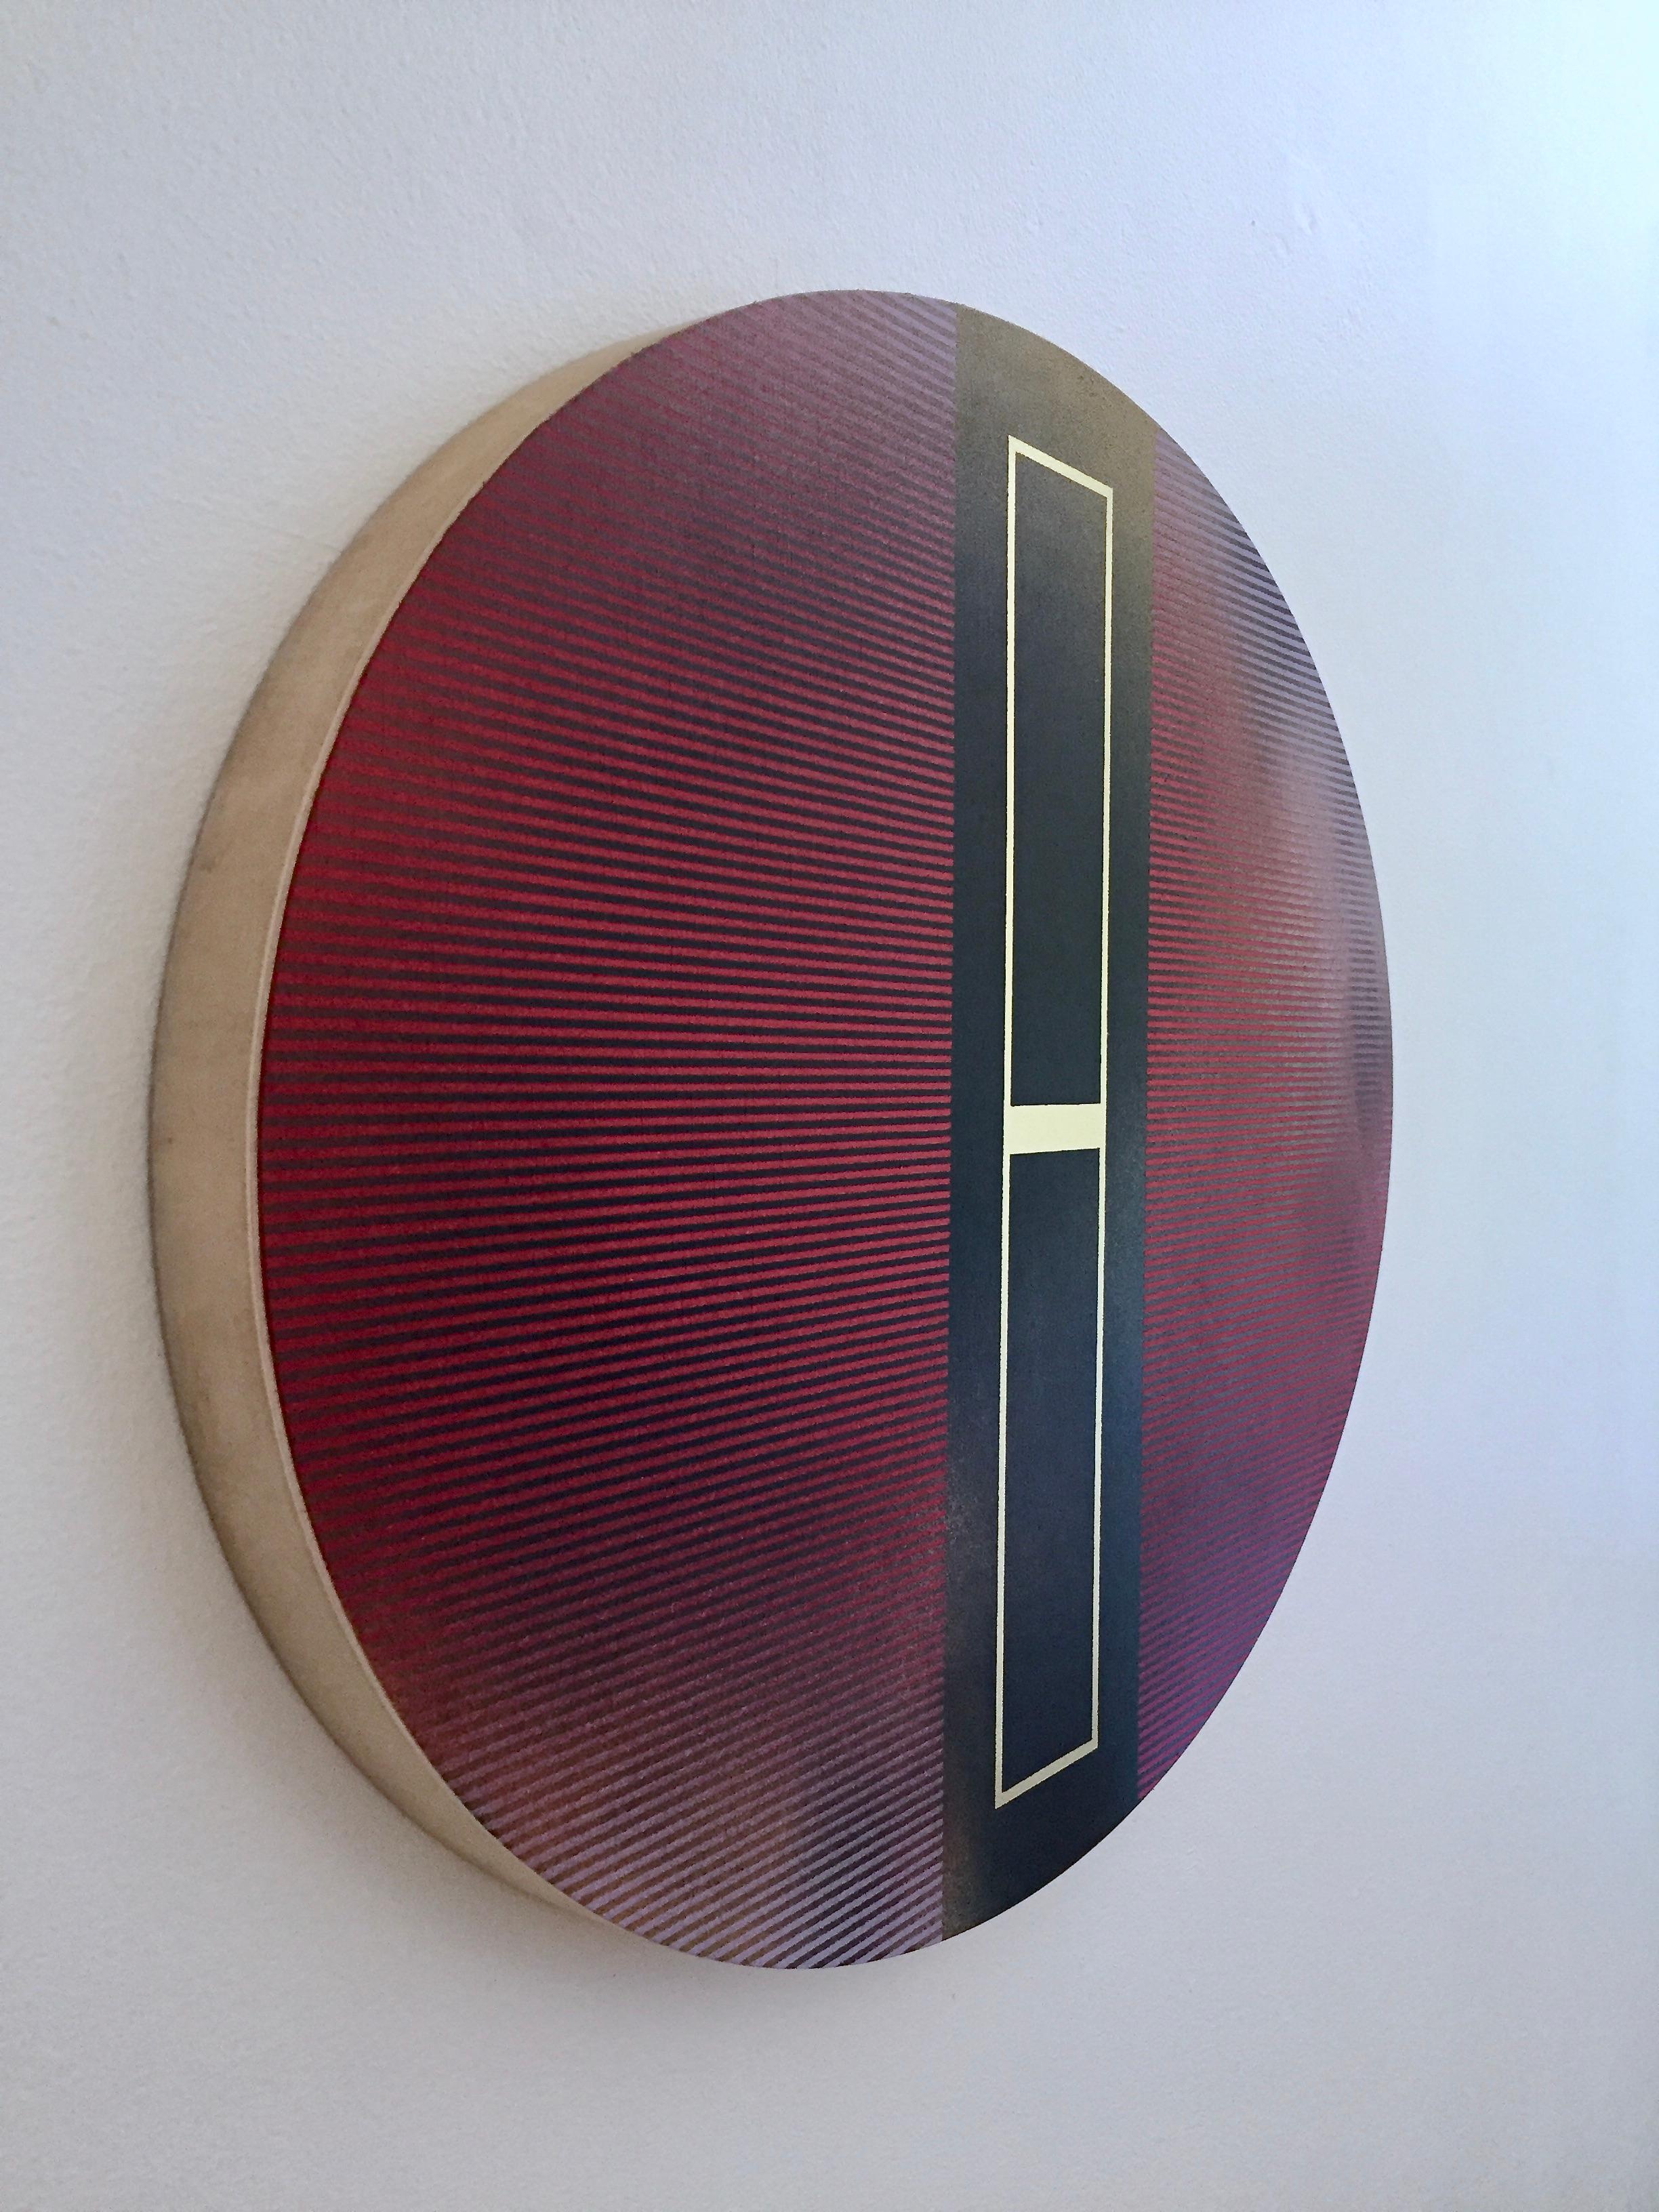 Mangata 48 Oval (panel tondo grid spray painting abstract wood Art Deco op art) - Minimalist Mixed Media Art by Melisa Taylor Metzger